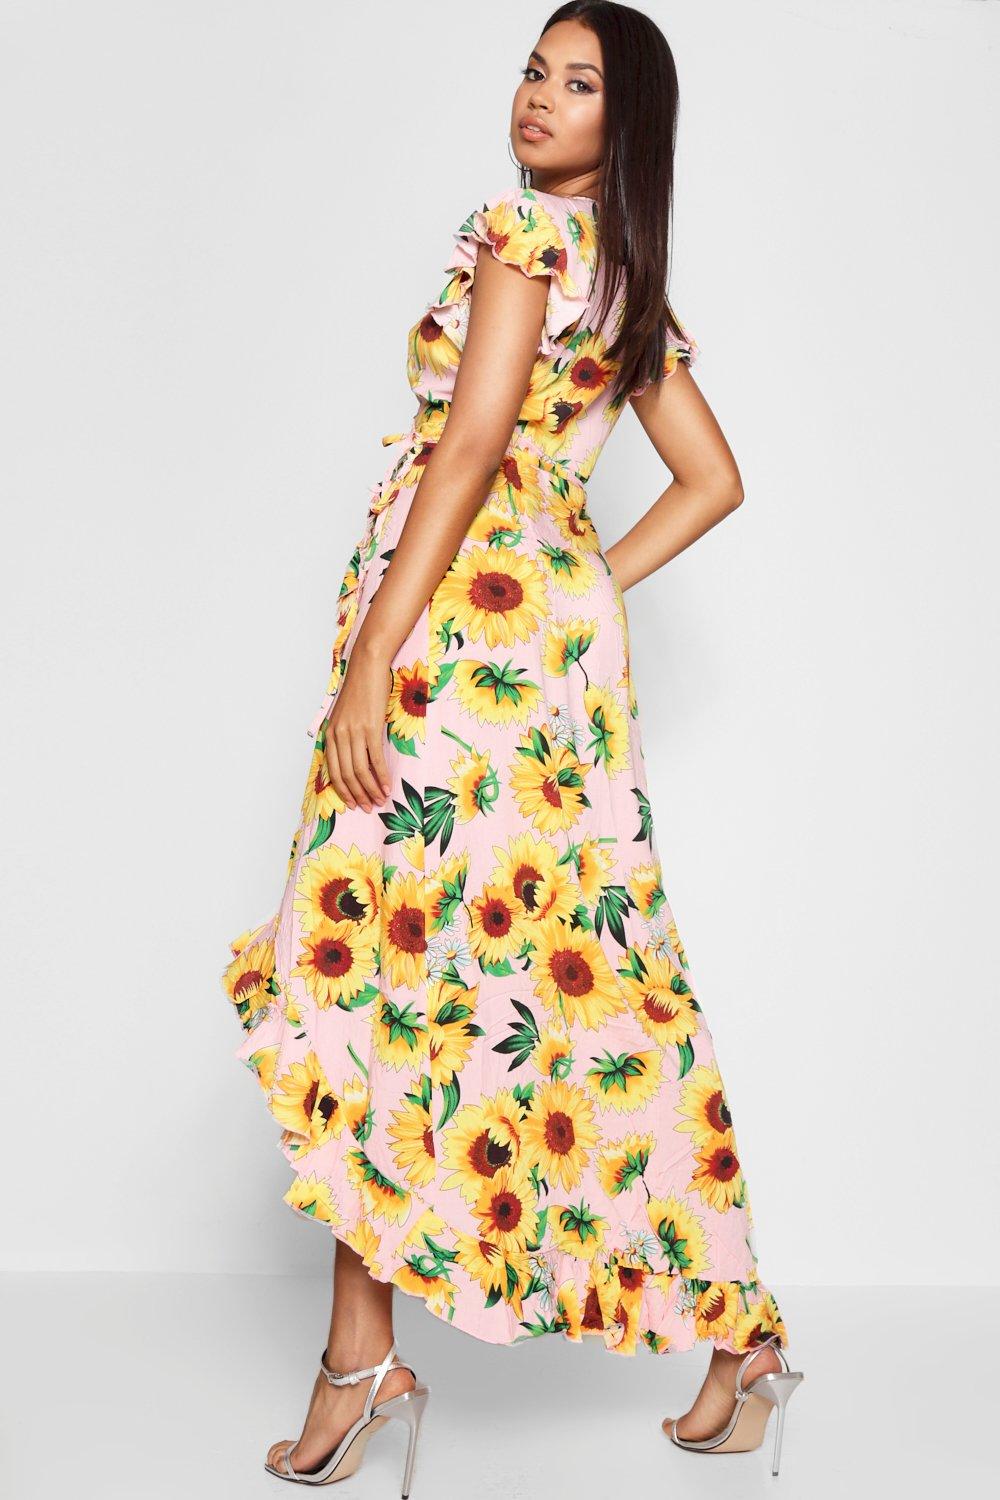 boohoo sunflower dress